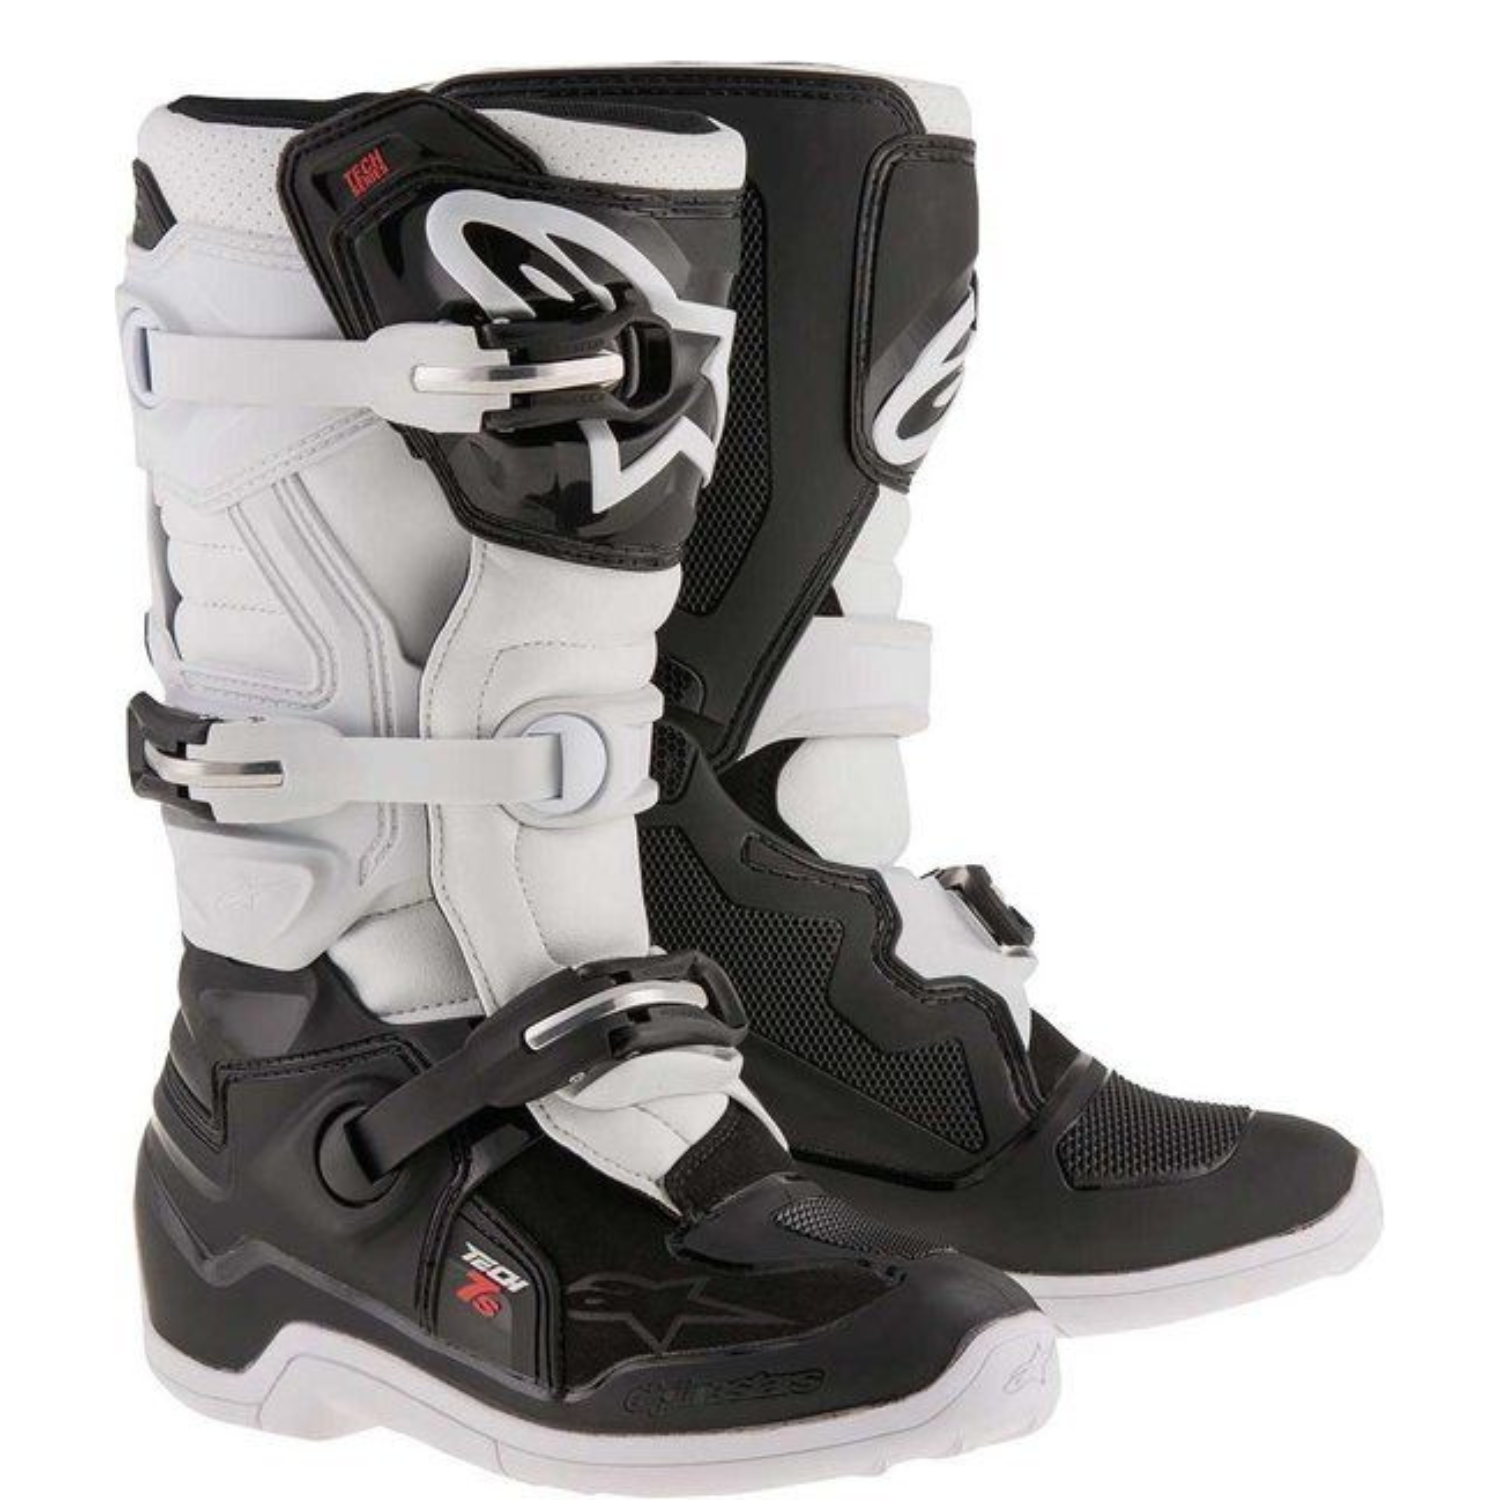 Image of Alpinestars Tech 7 S Black White Boots Size US 4 EN